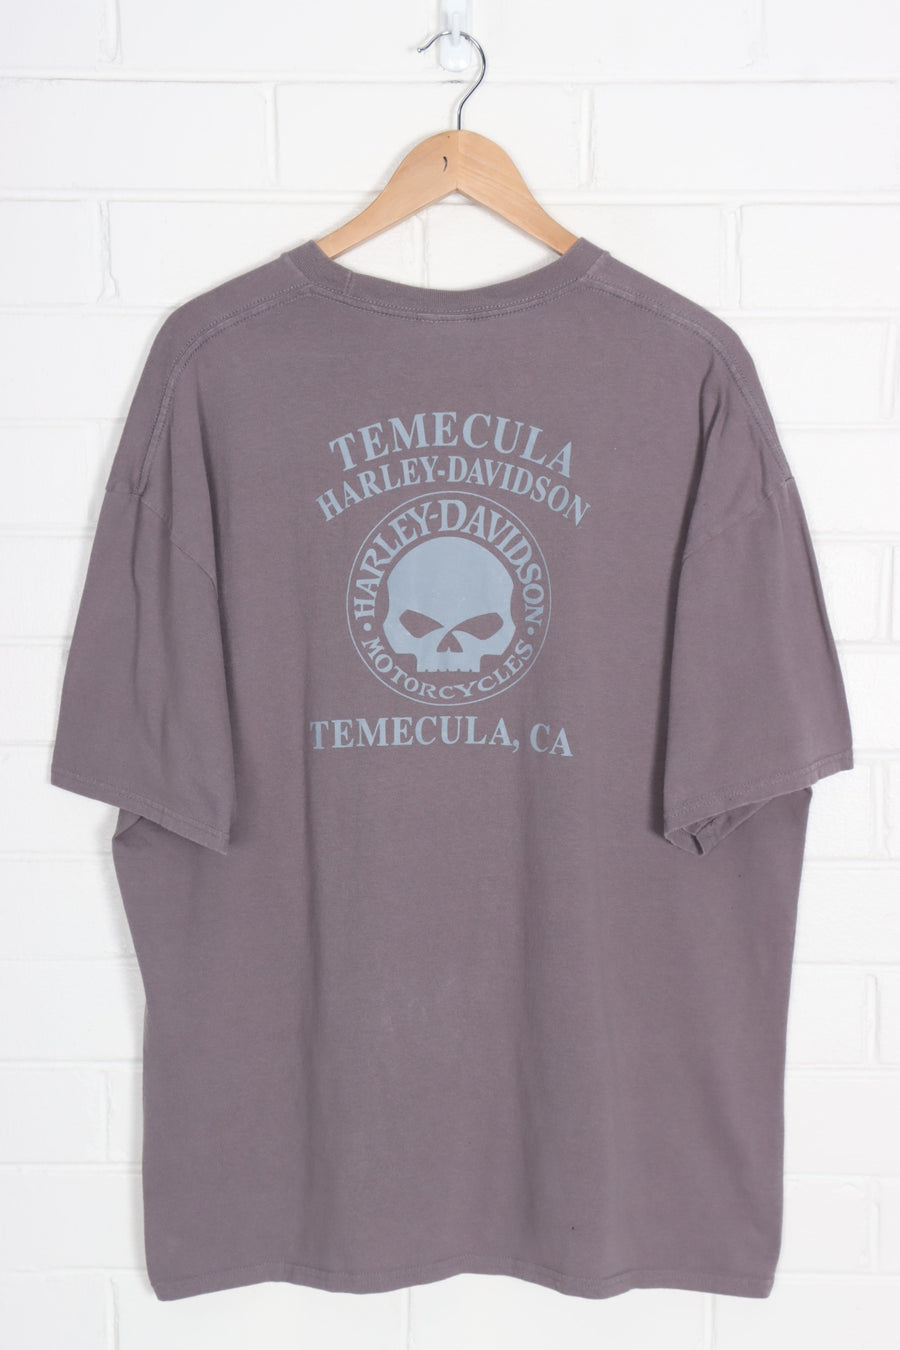 HARLEY DAVIDSON Temecula California Front & Back Tee (XXL)